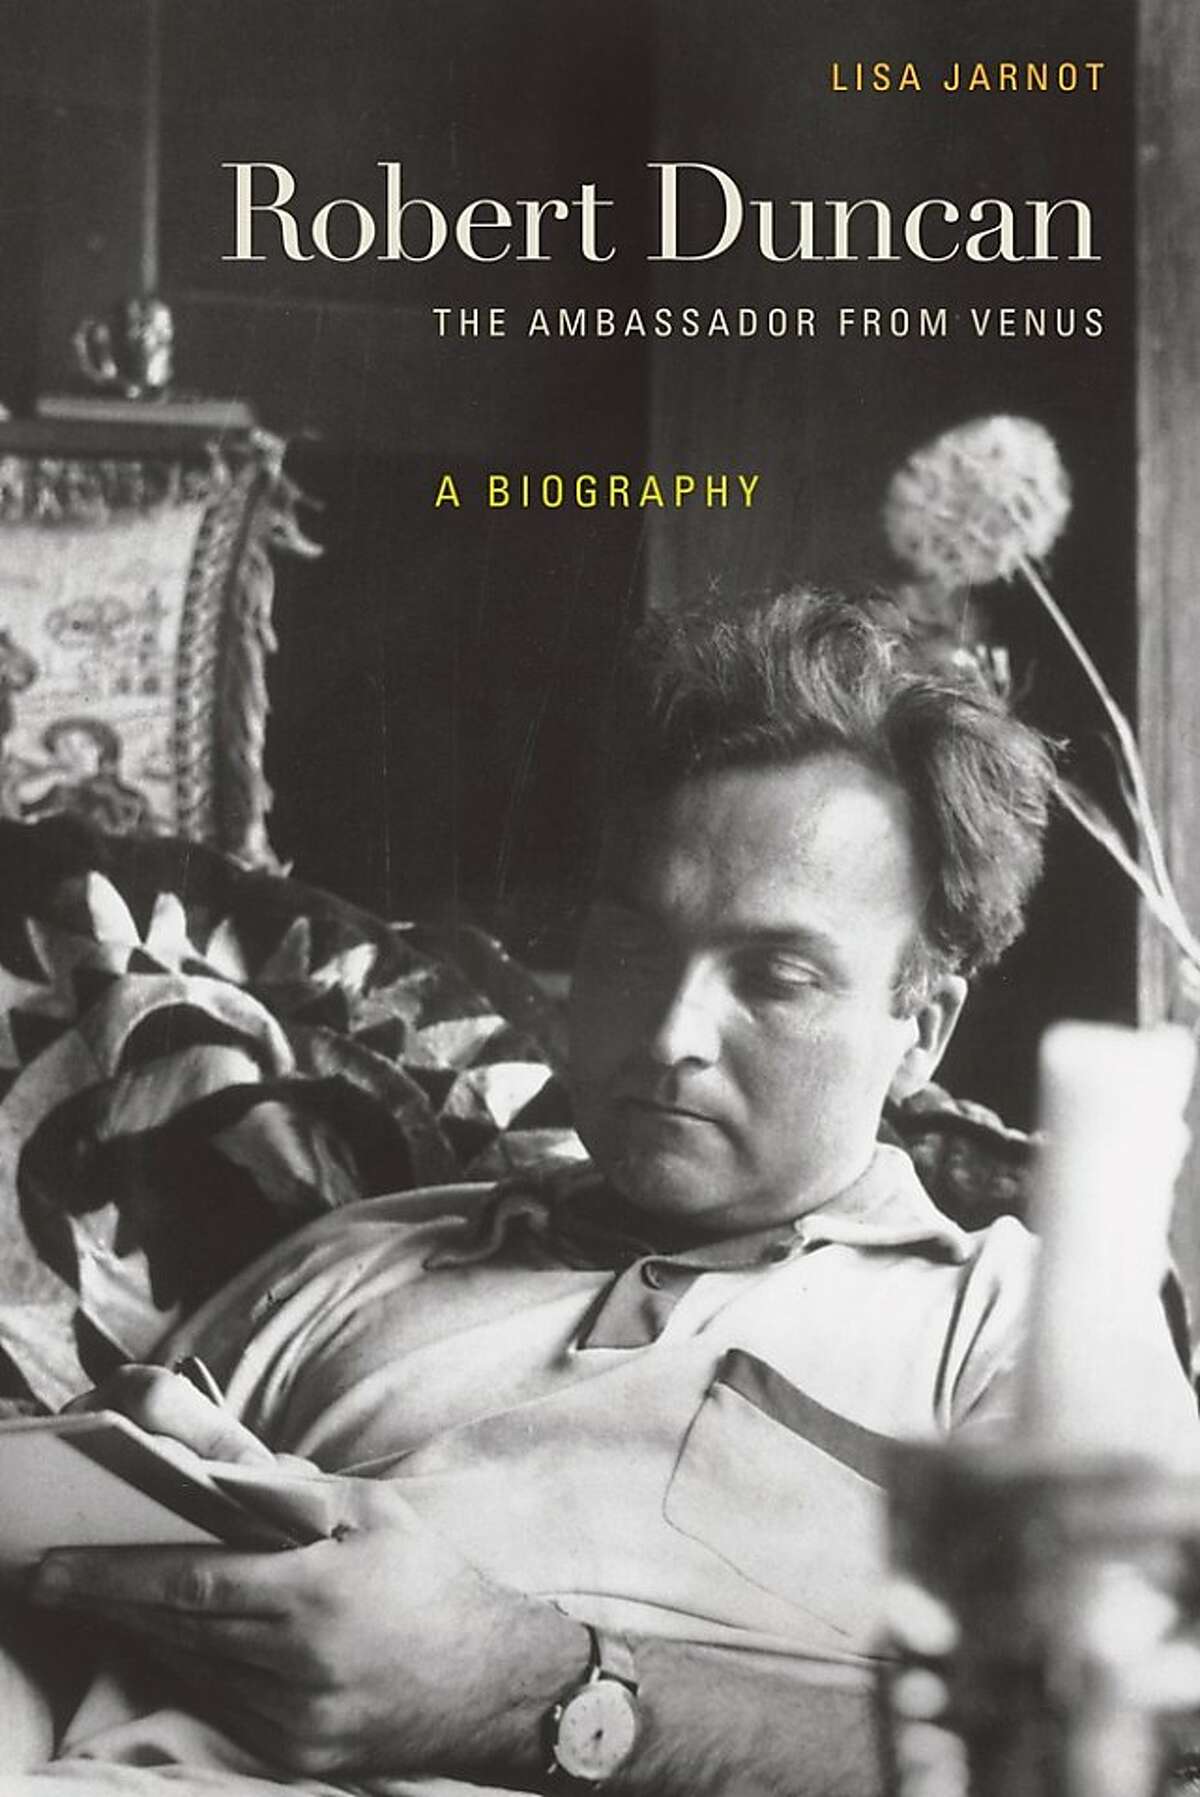 Robert Duncan: The Ambassador From Venus: A Biography, by Lisa Jarnot